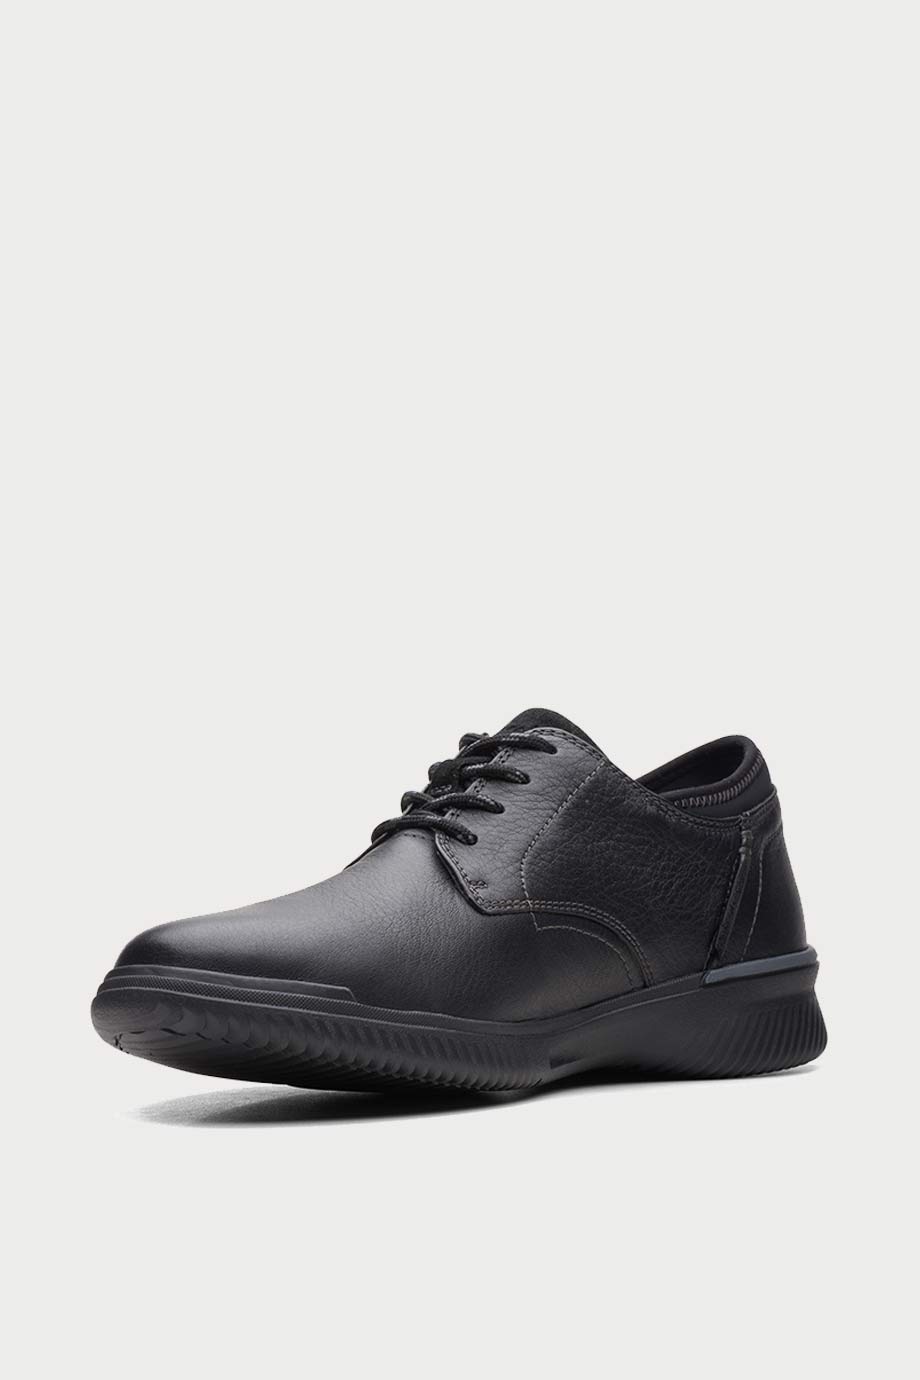 spiridoula metheniti shoes xalkida p donaway plain black leather clarks 4